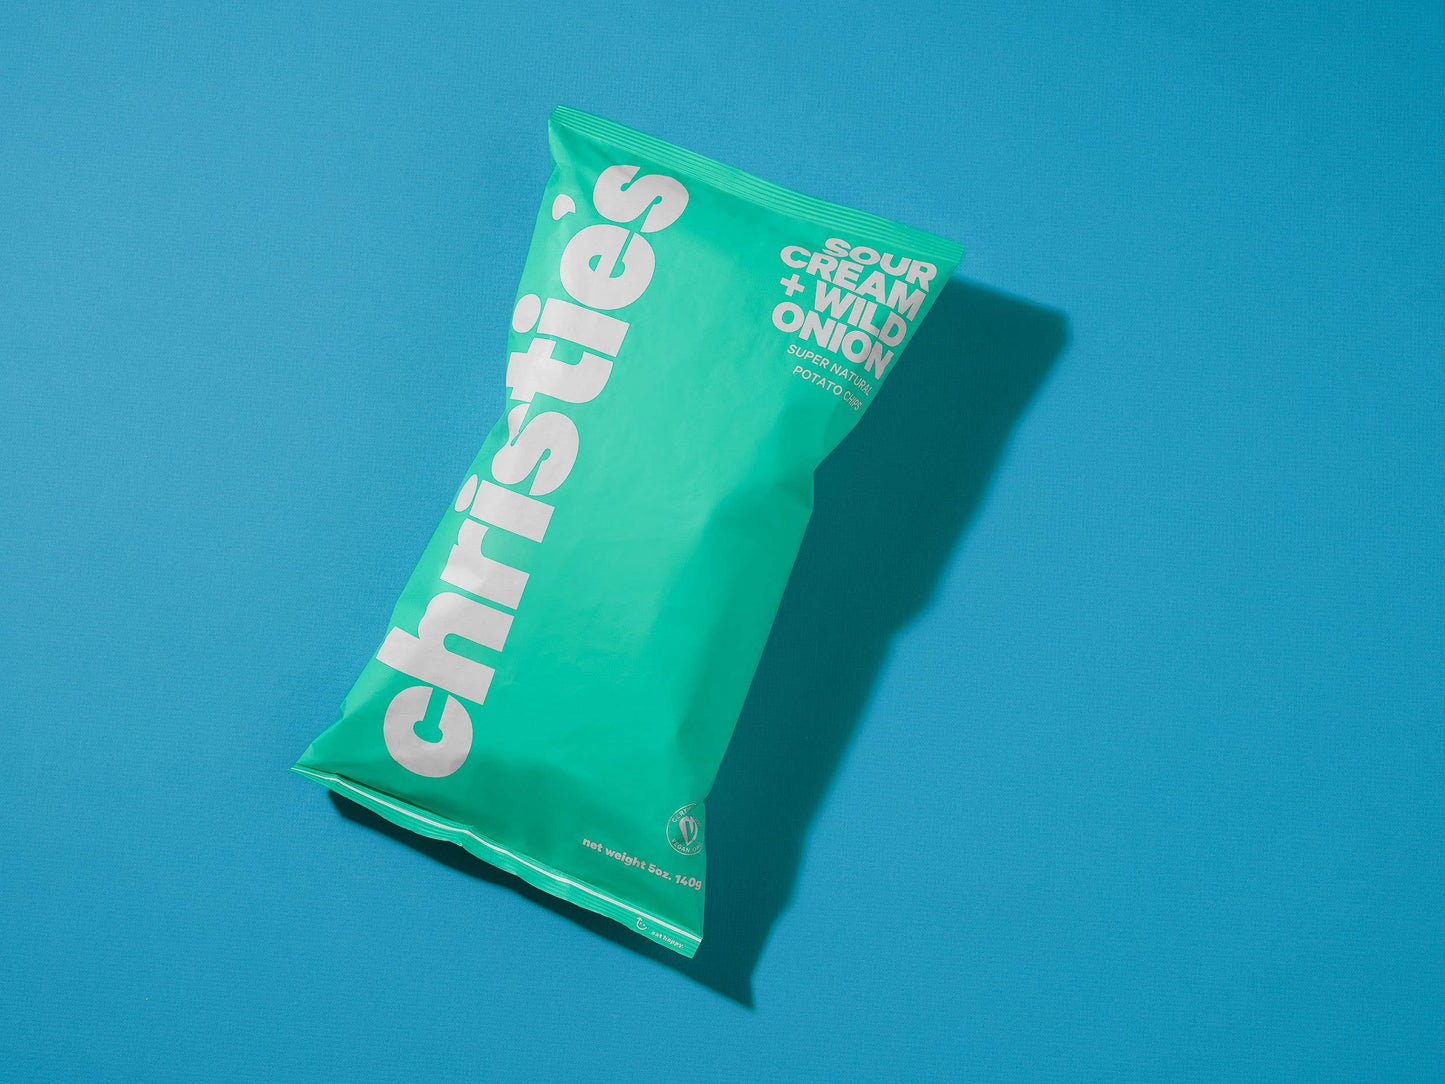 Christie's Sour Cream and Wild Onion Potato Chips Snack Bag